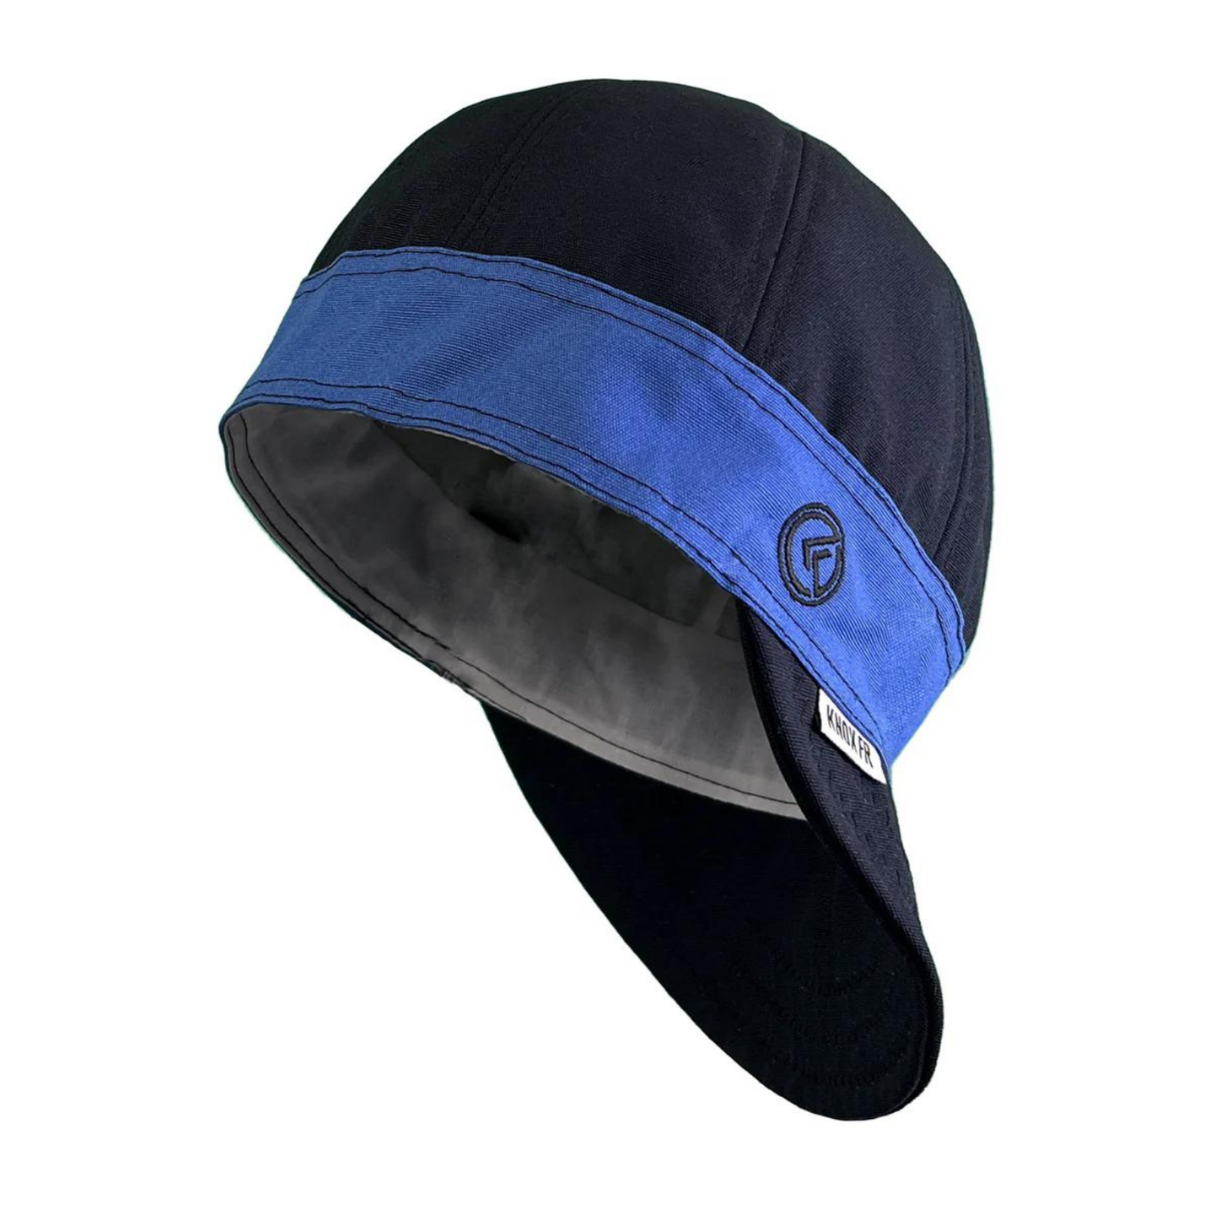 Welding Cap Black - KNOX FR Black Cap - Cap For Men